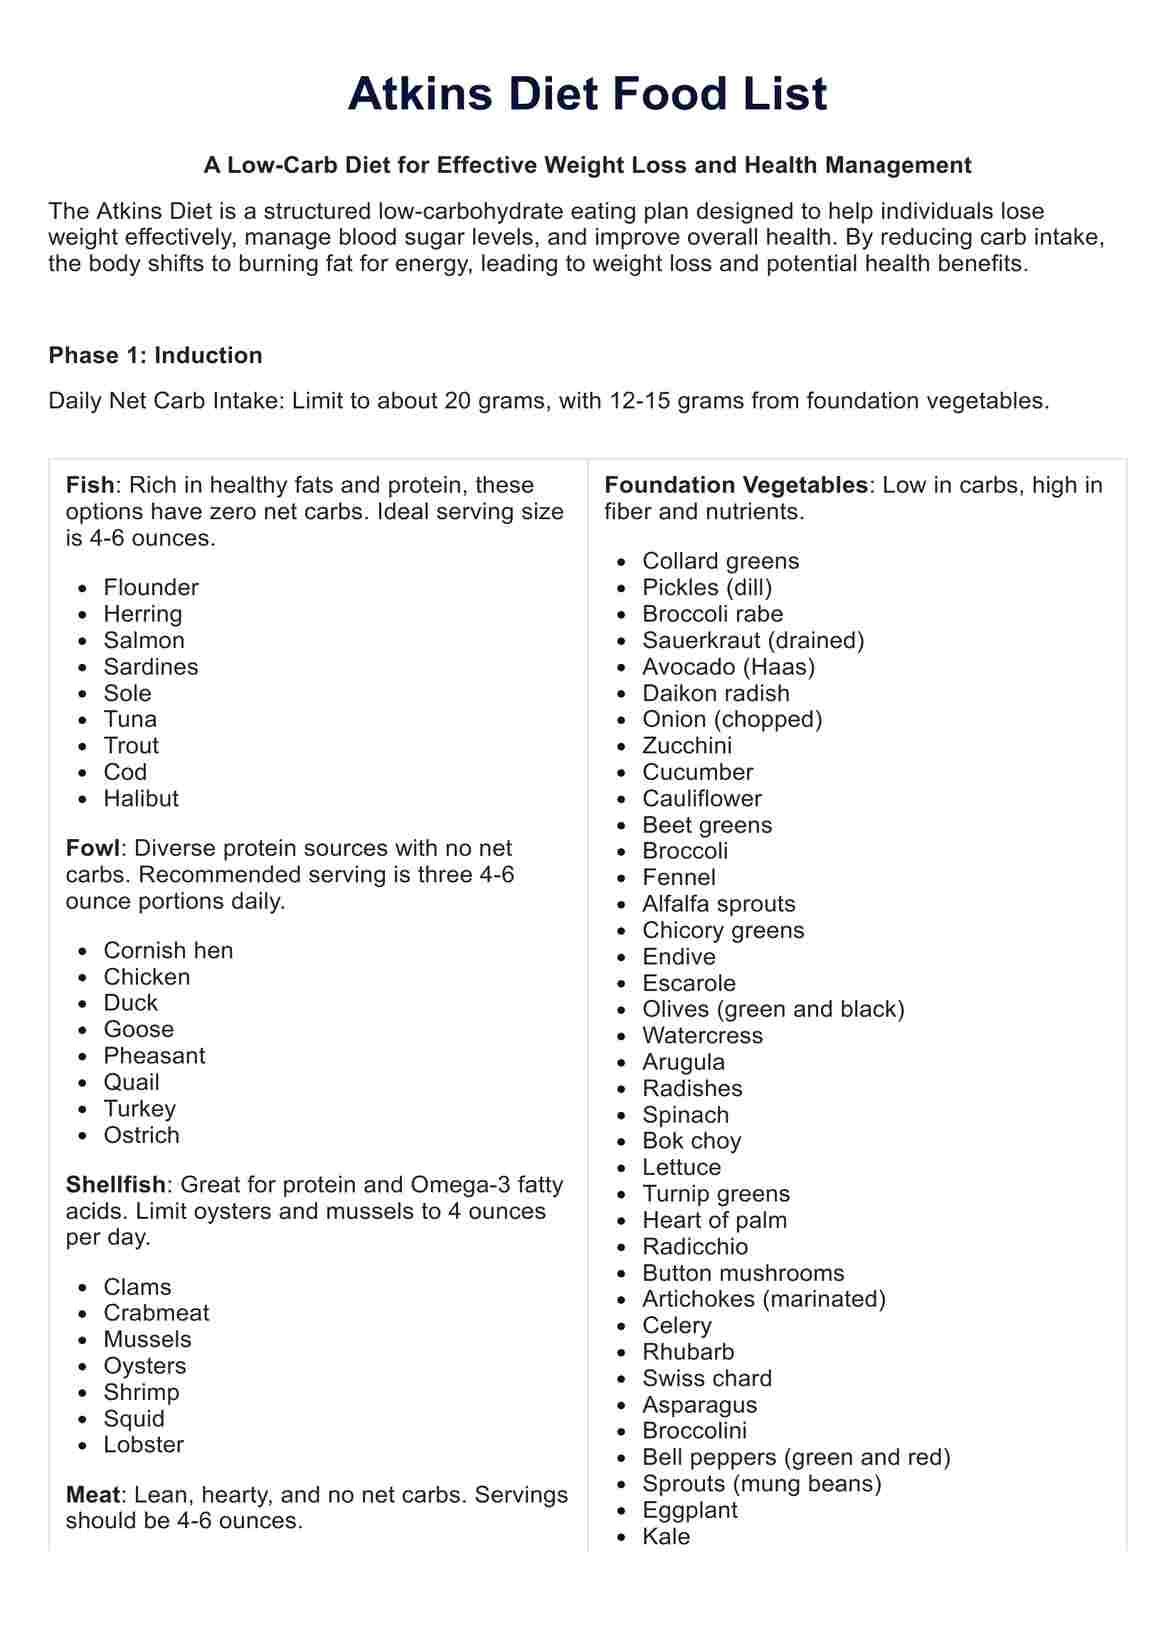 Atkins Diet Food PDF Example